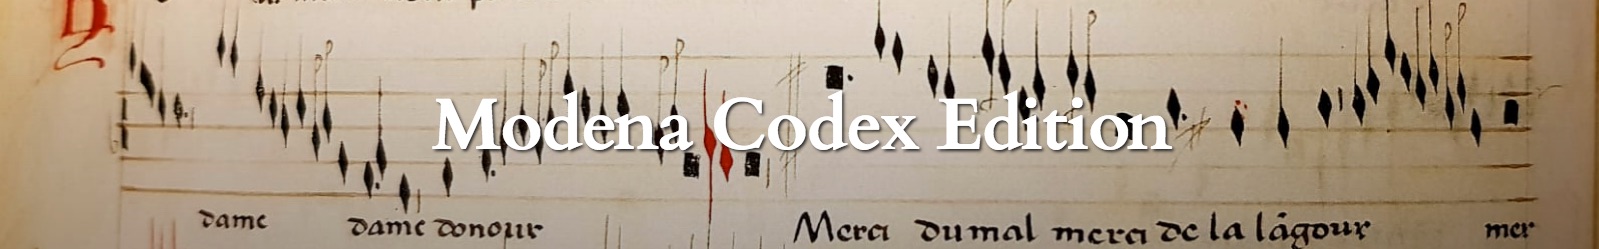 Modena Codex